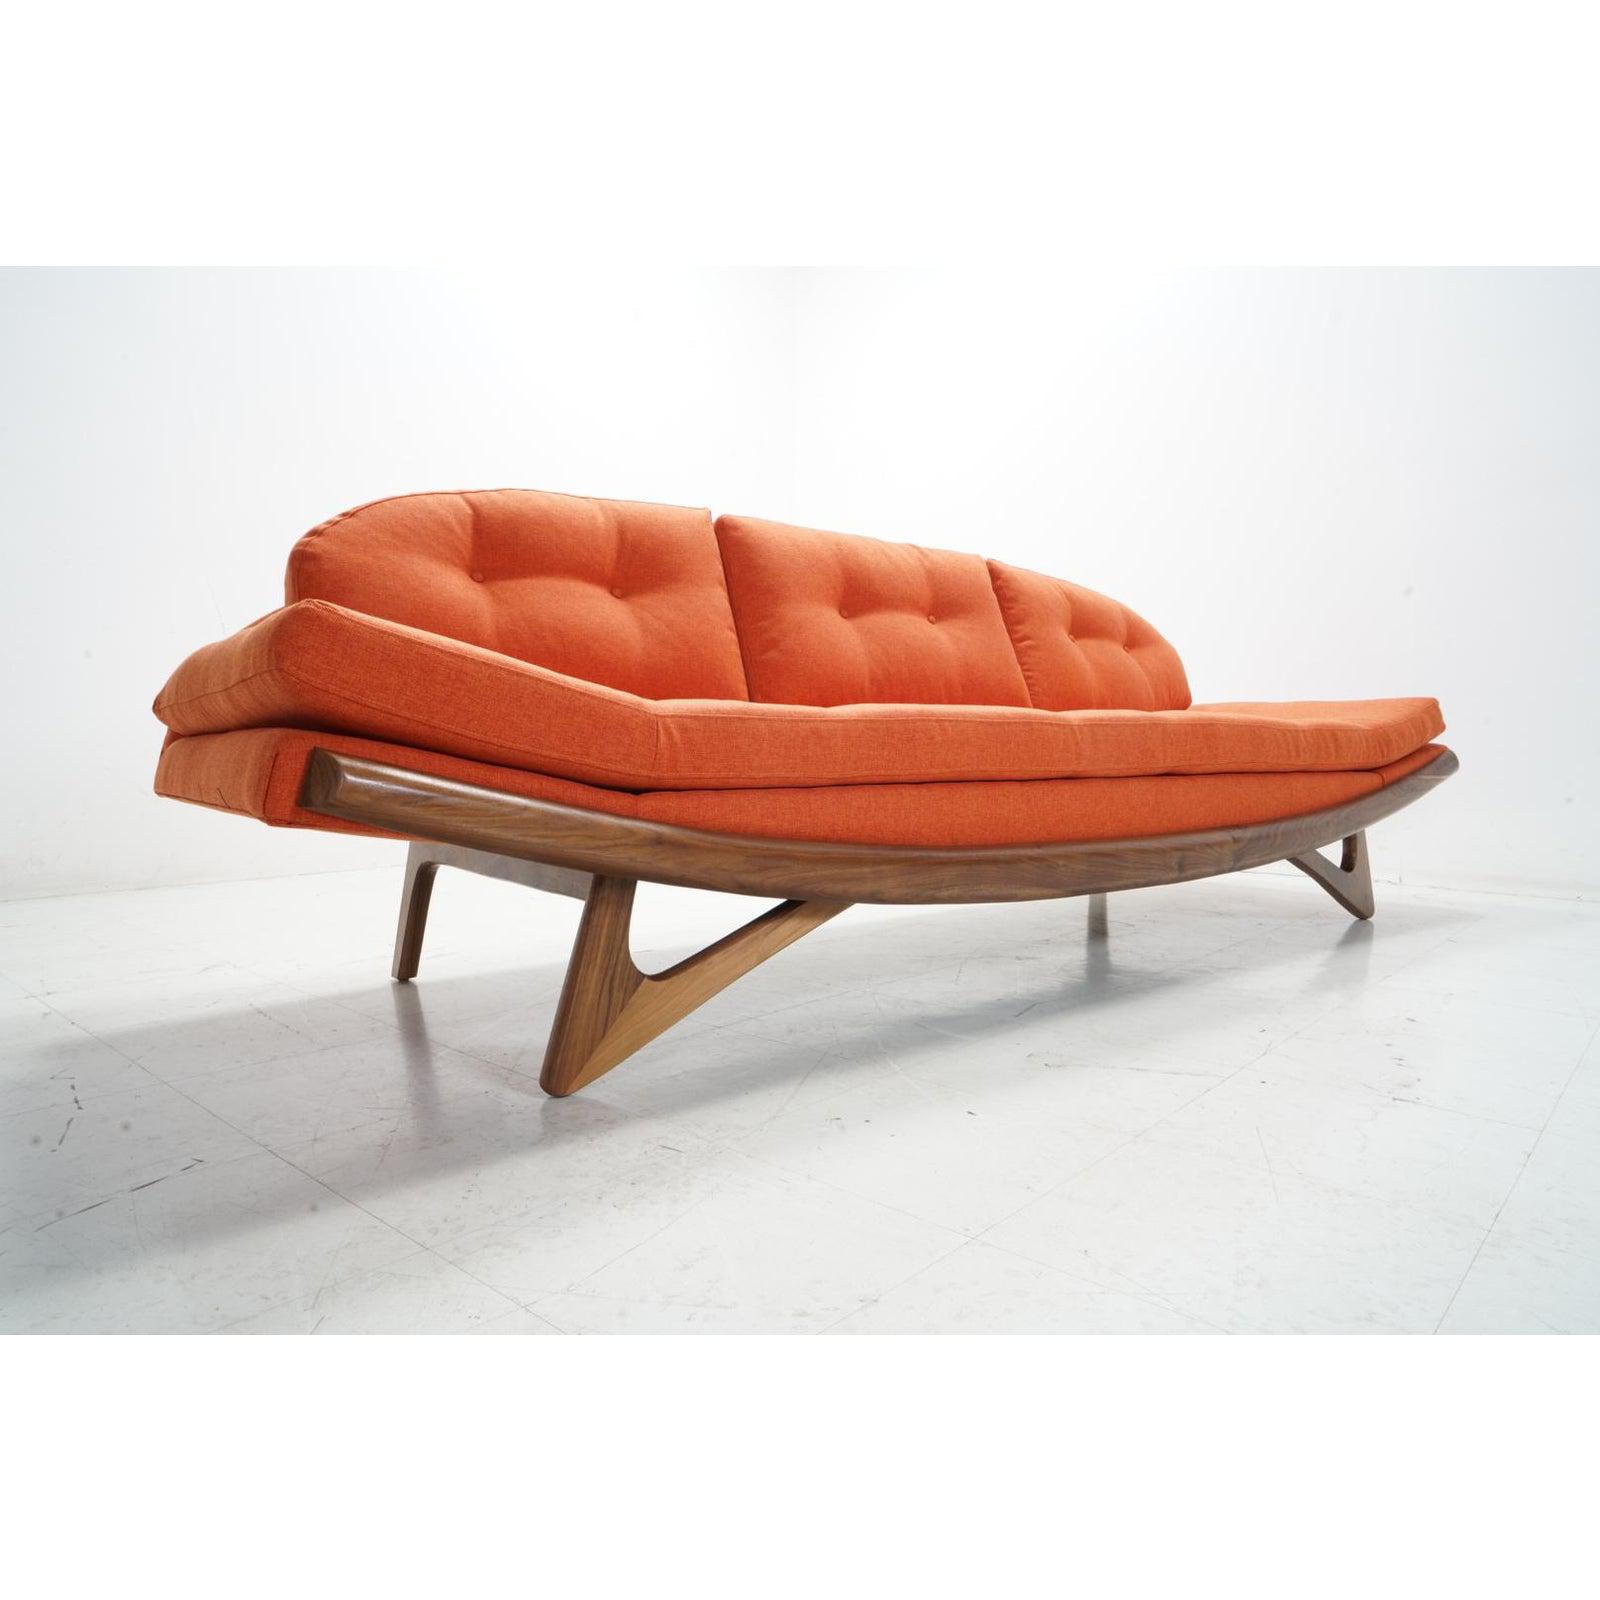 Custom "Curved Gondola" Sofa